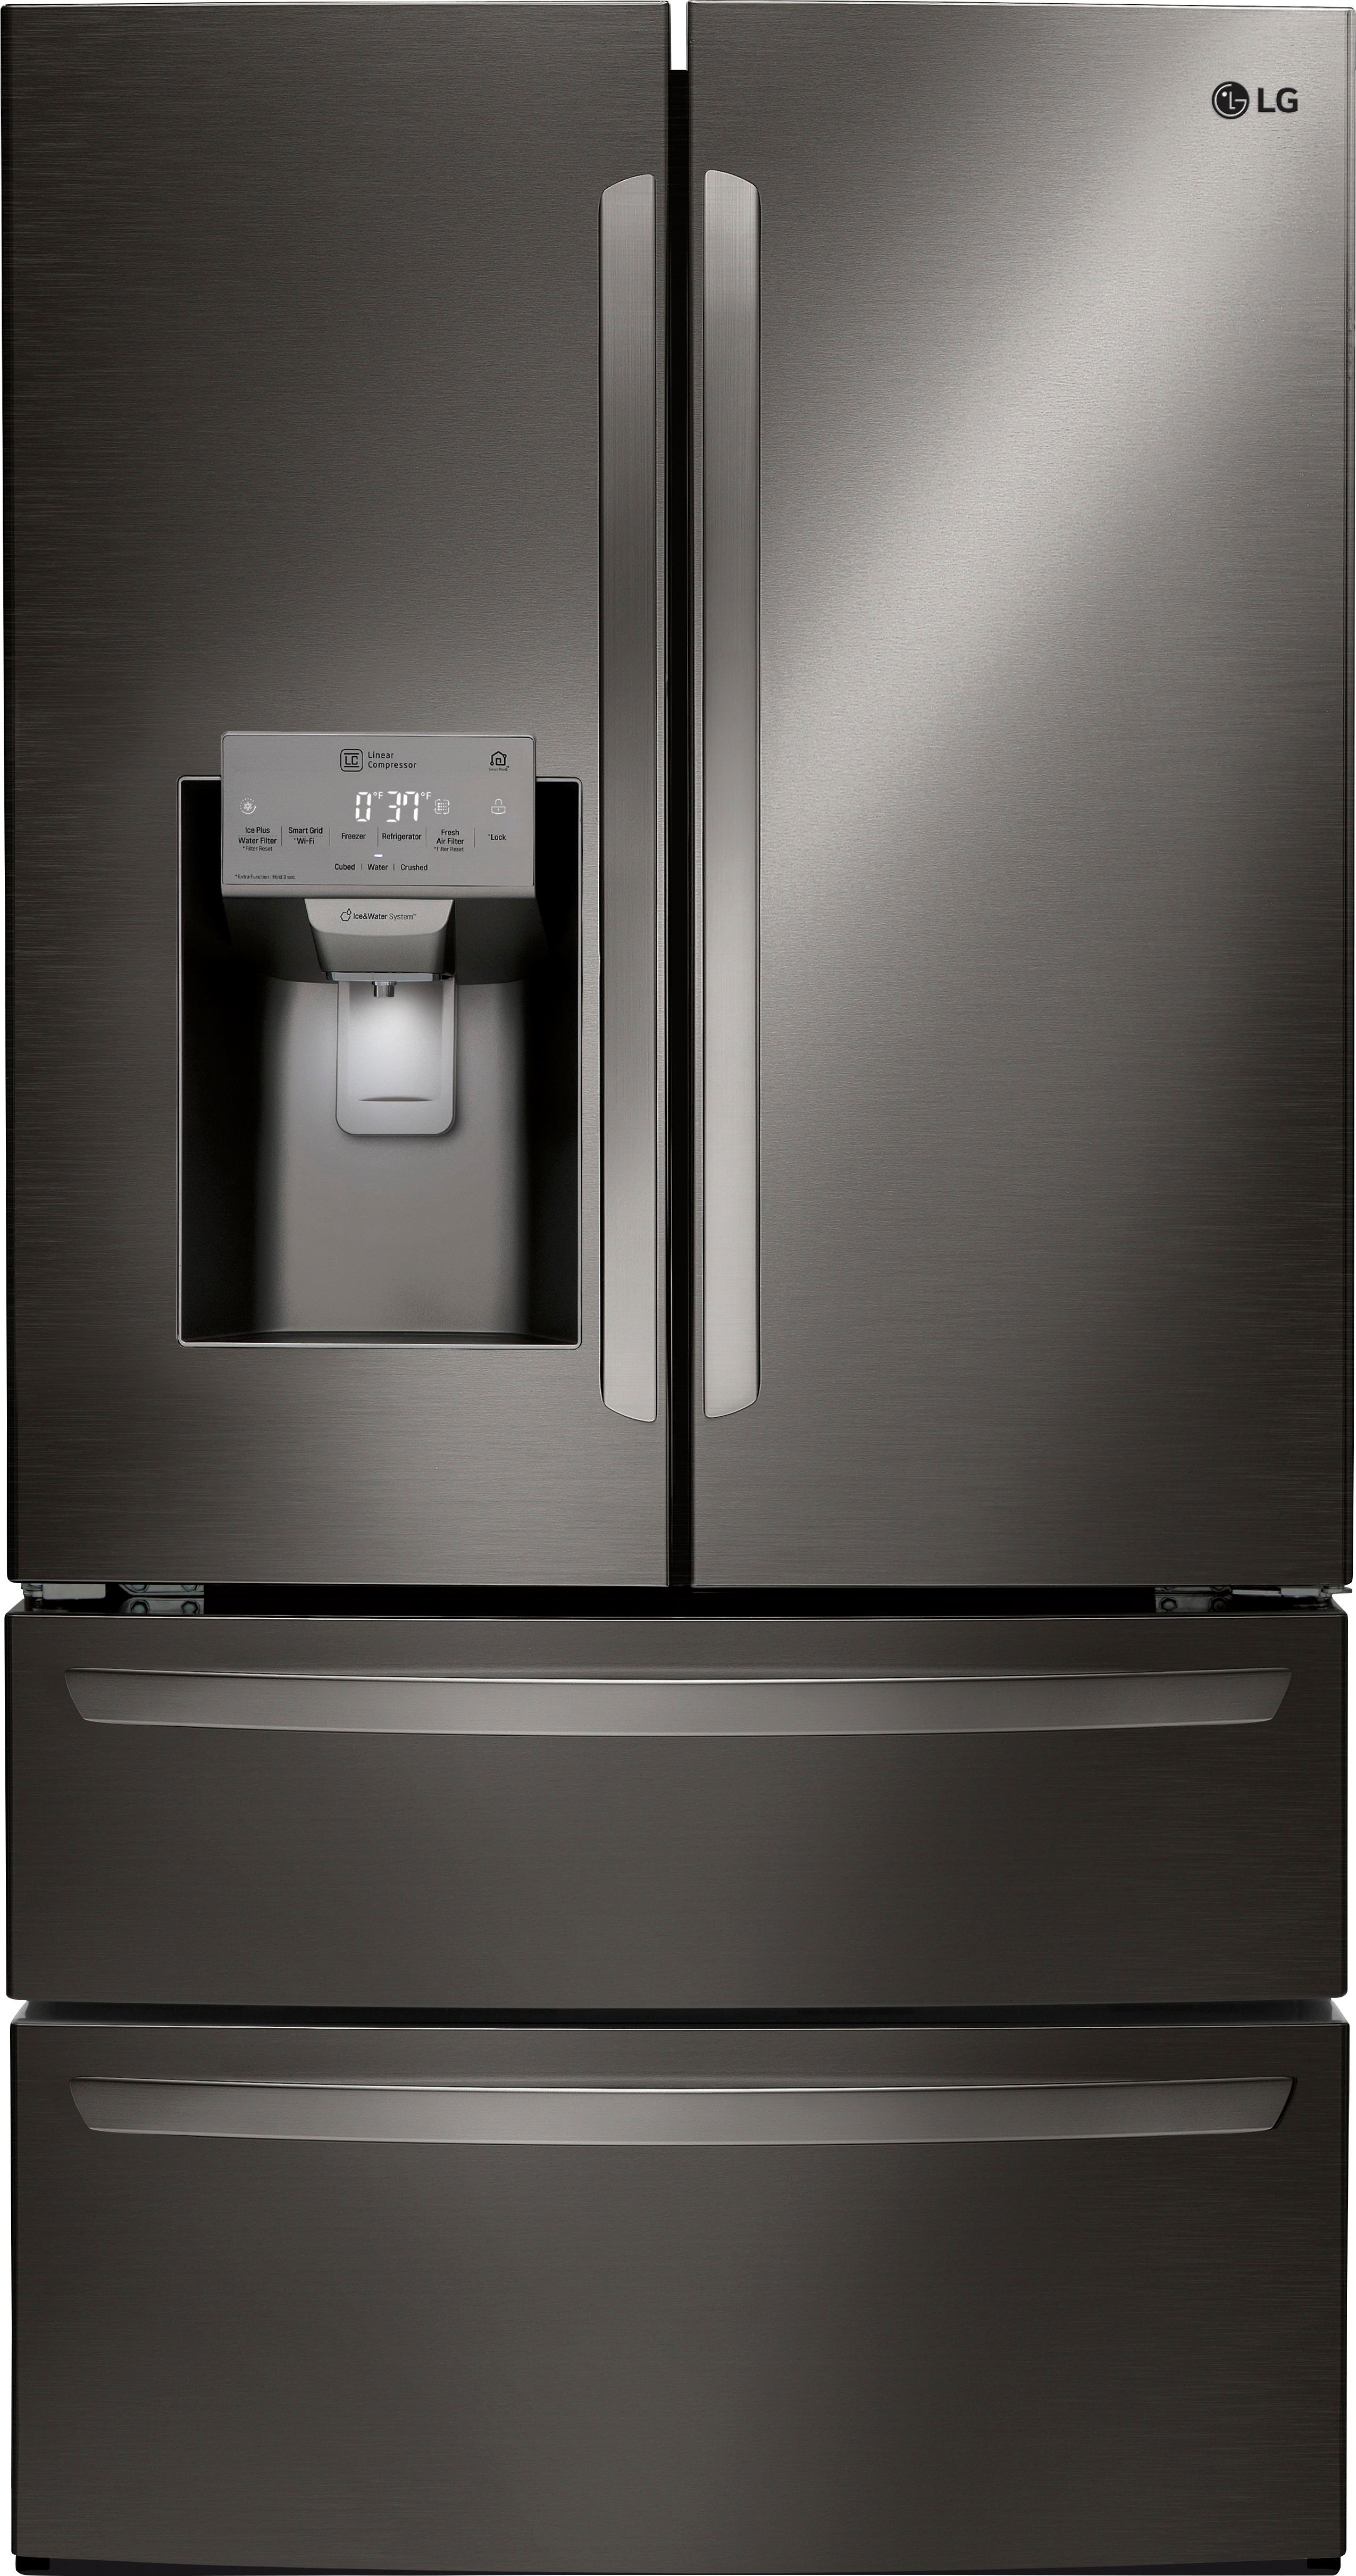 lg-refrigerator-control-panel-reset-ubicaciondepersonas-cdmx-gob-mx